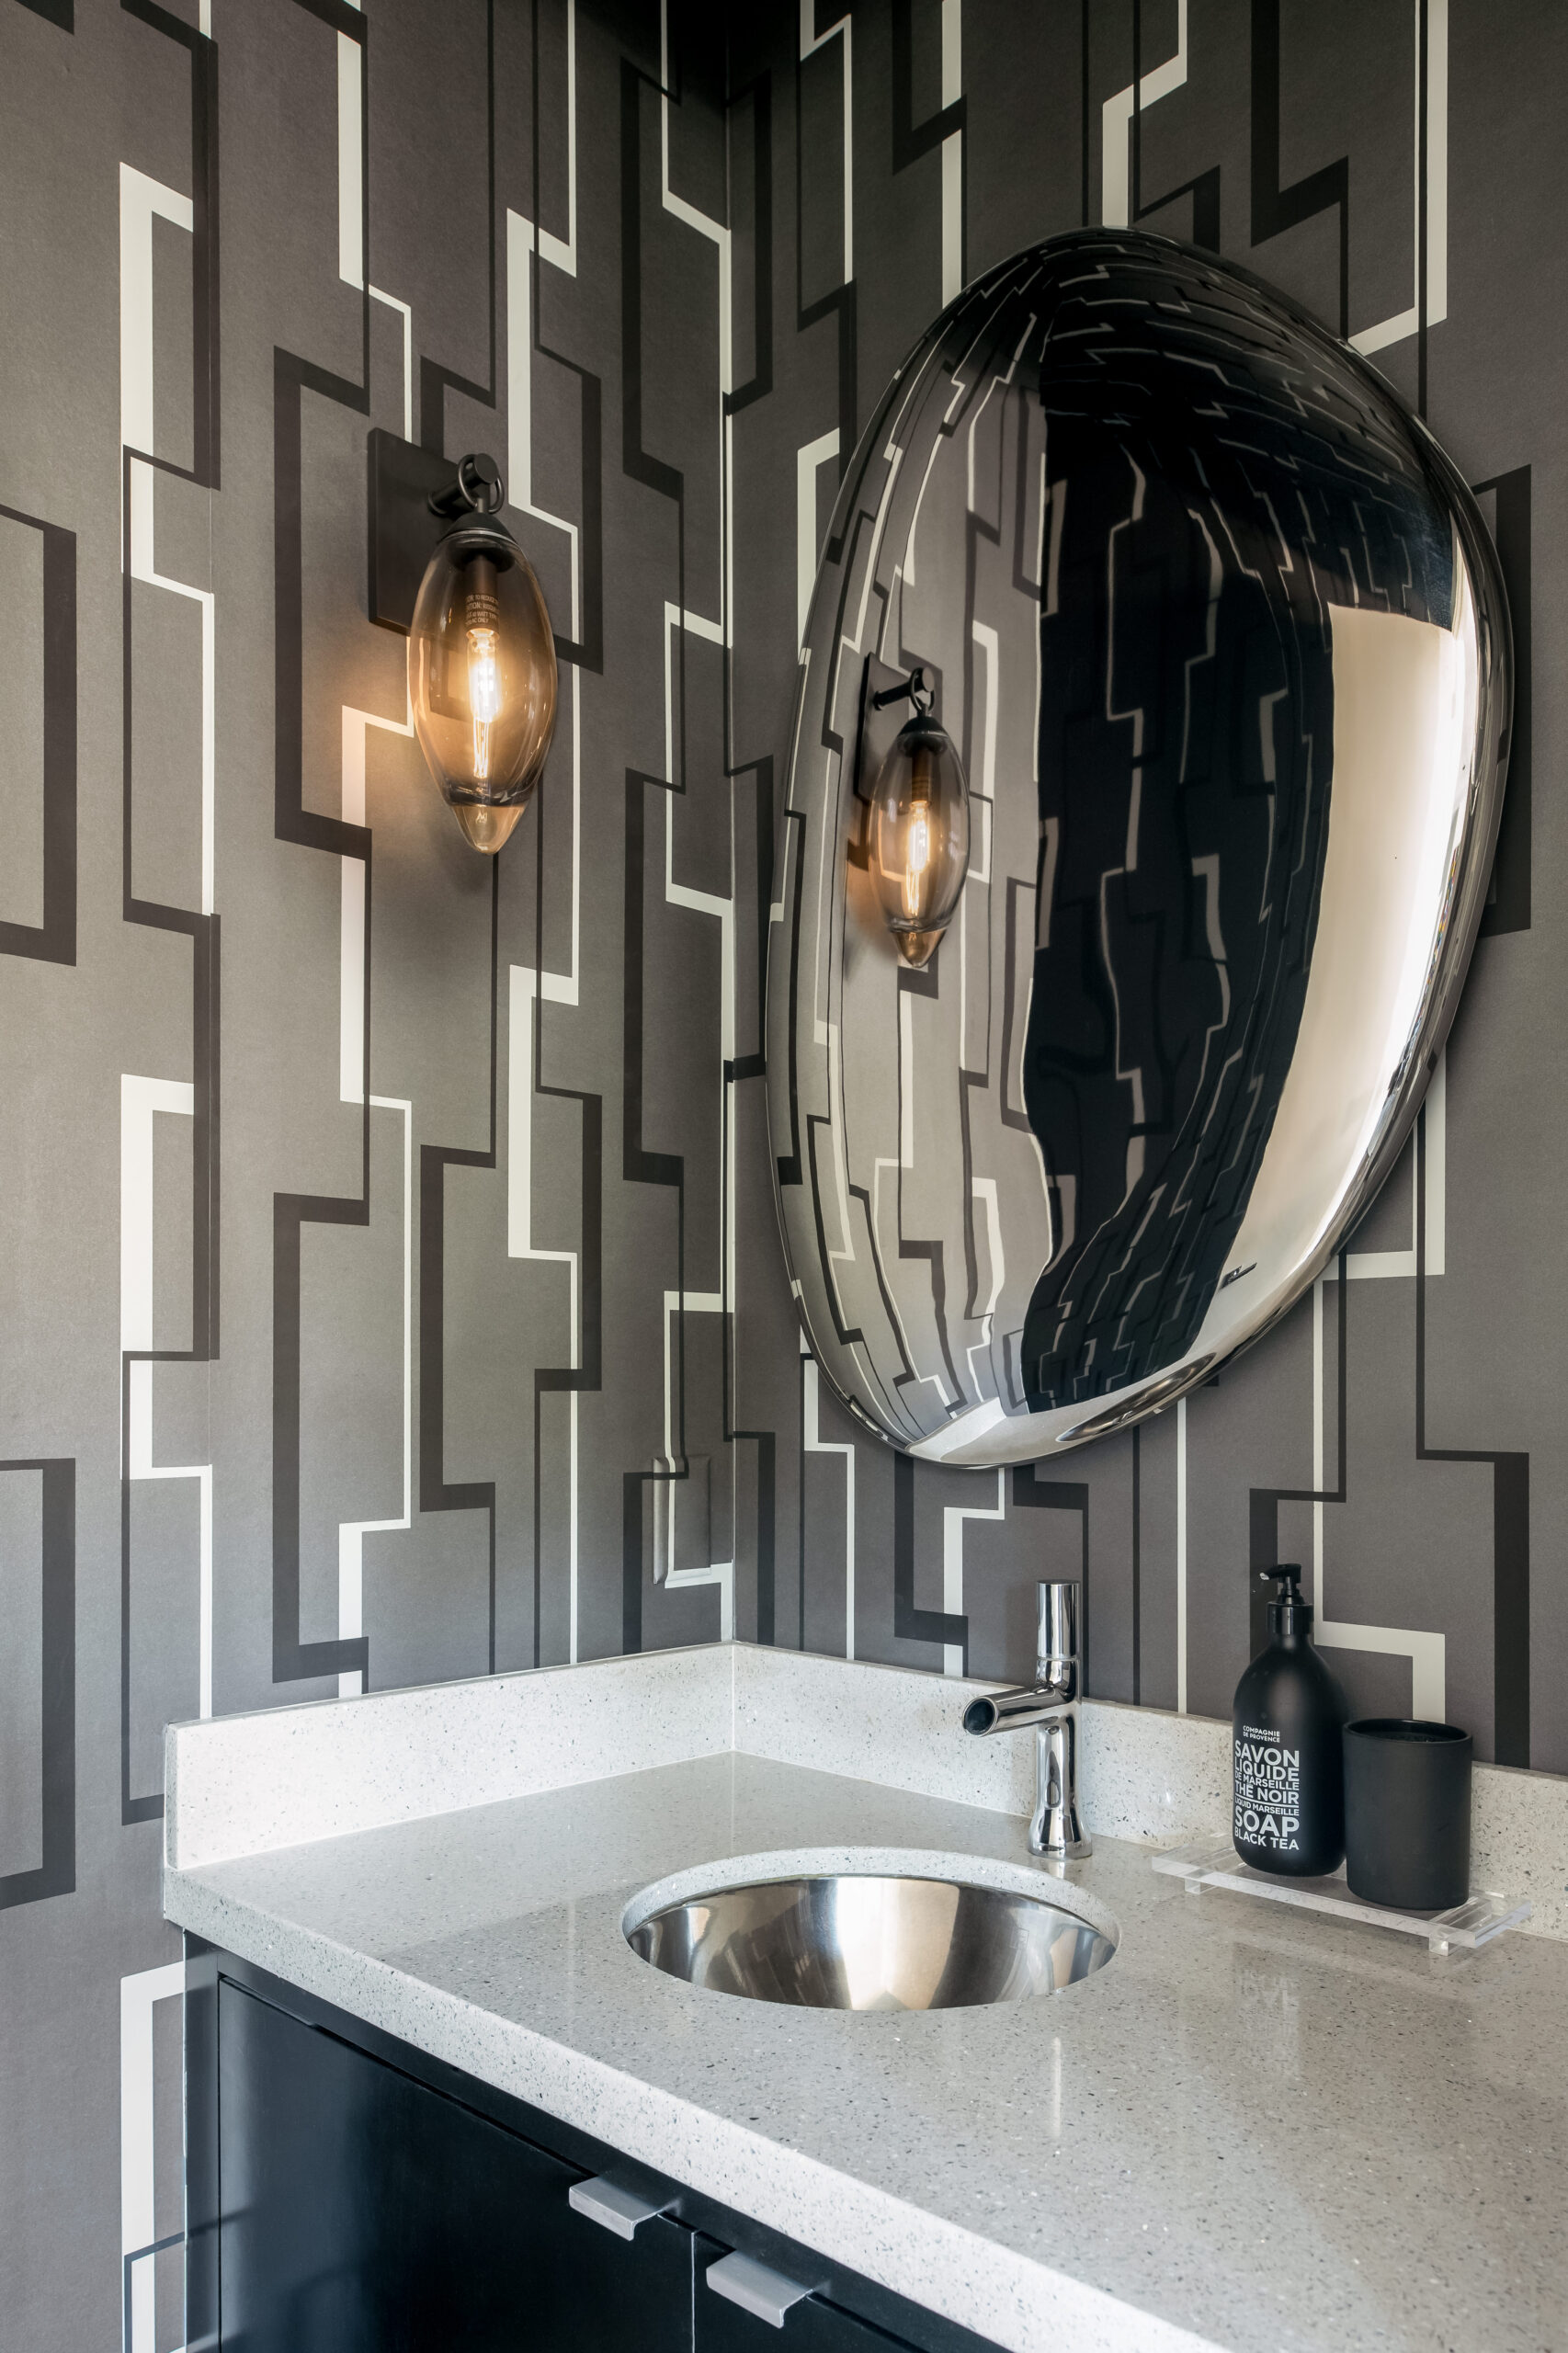 Luxury bathroom interior design with modern wallpaper